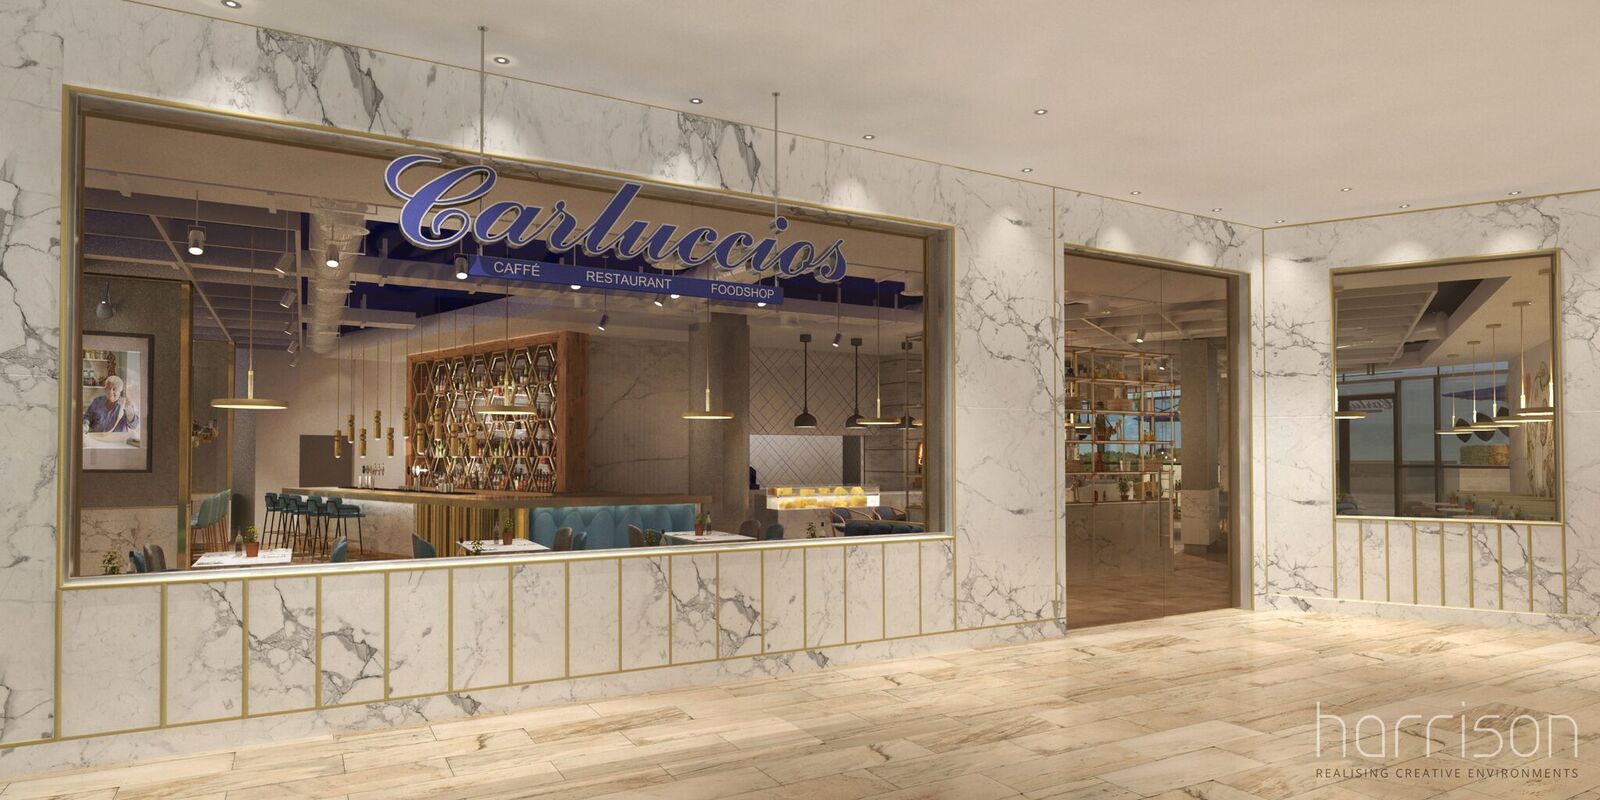 علامة كارلوتشيوز تفتتح مطعم جديد لها في دبي